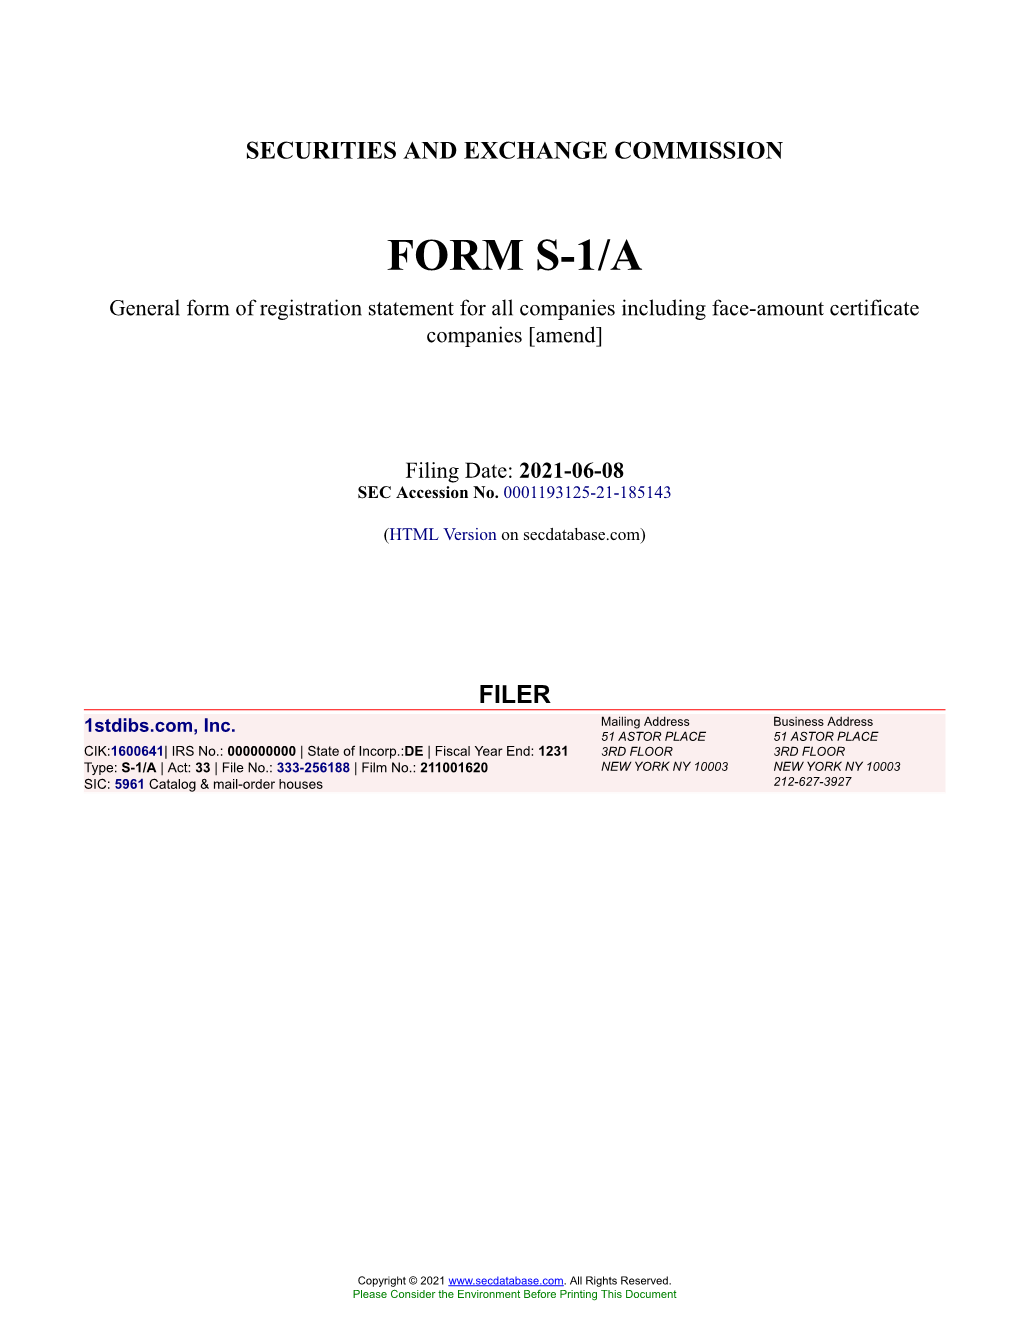 1Stdibs.Com, Inc. Form S-1/A Filed 2021-06-08